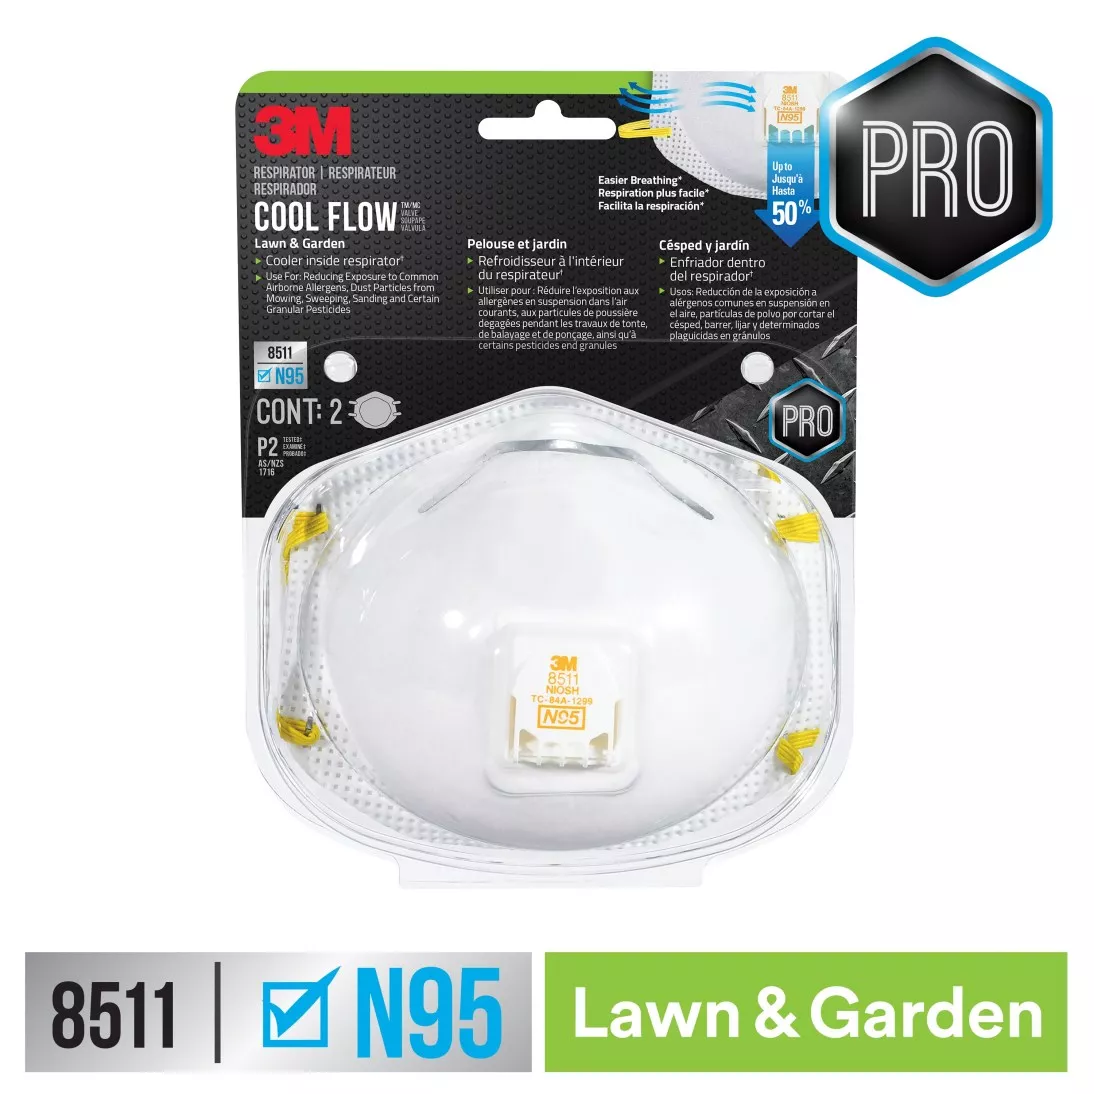 3M™ Lawn & Garden Valved Respirator 8511G2-DC-PS, 2 each/pack, 3
packs/case